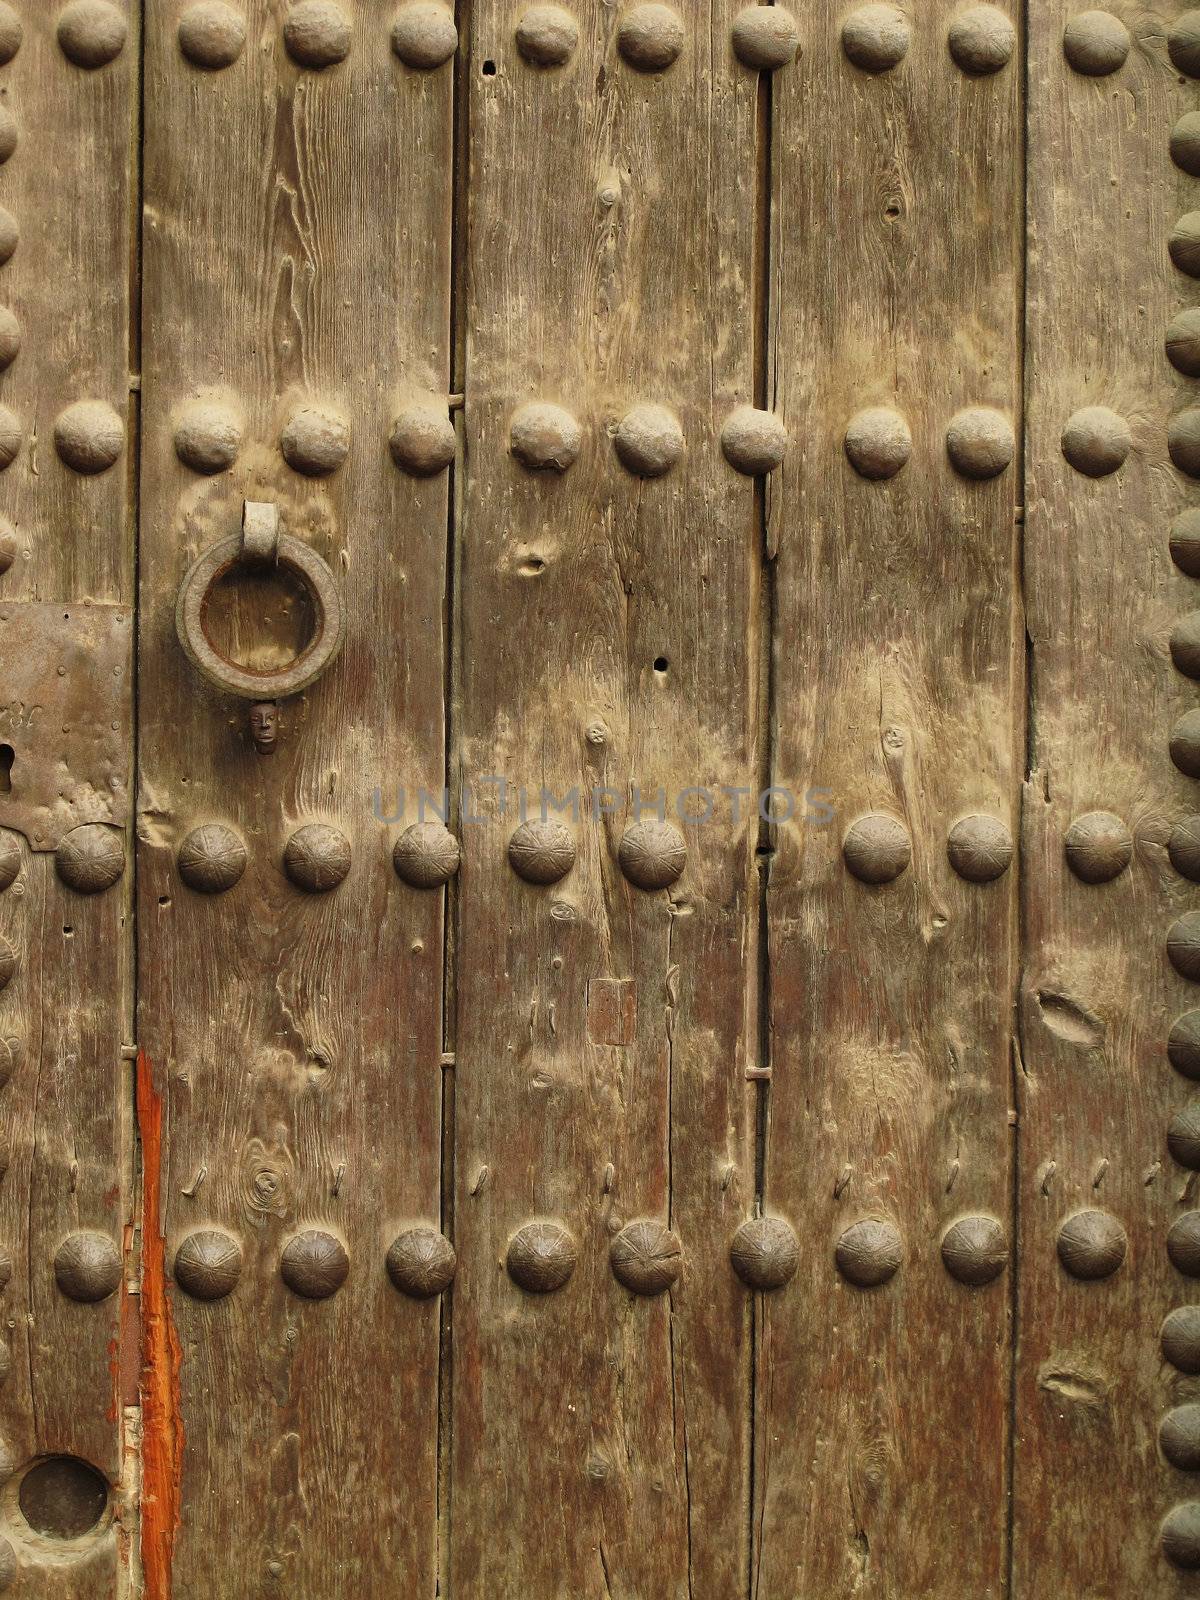 wooden surface of a door by Arrxxx